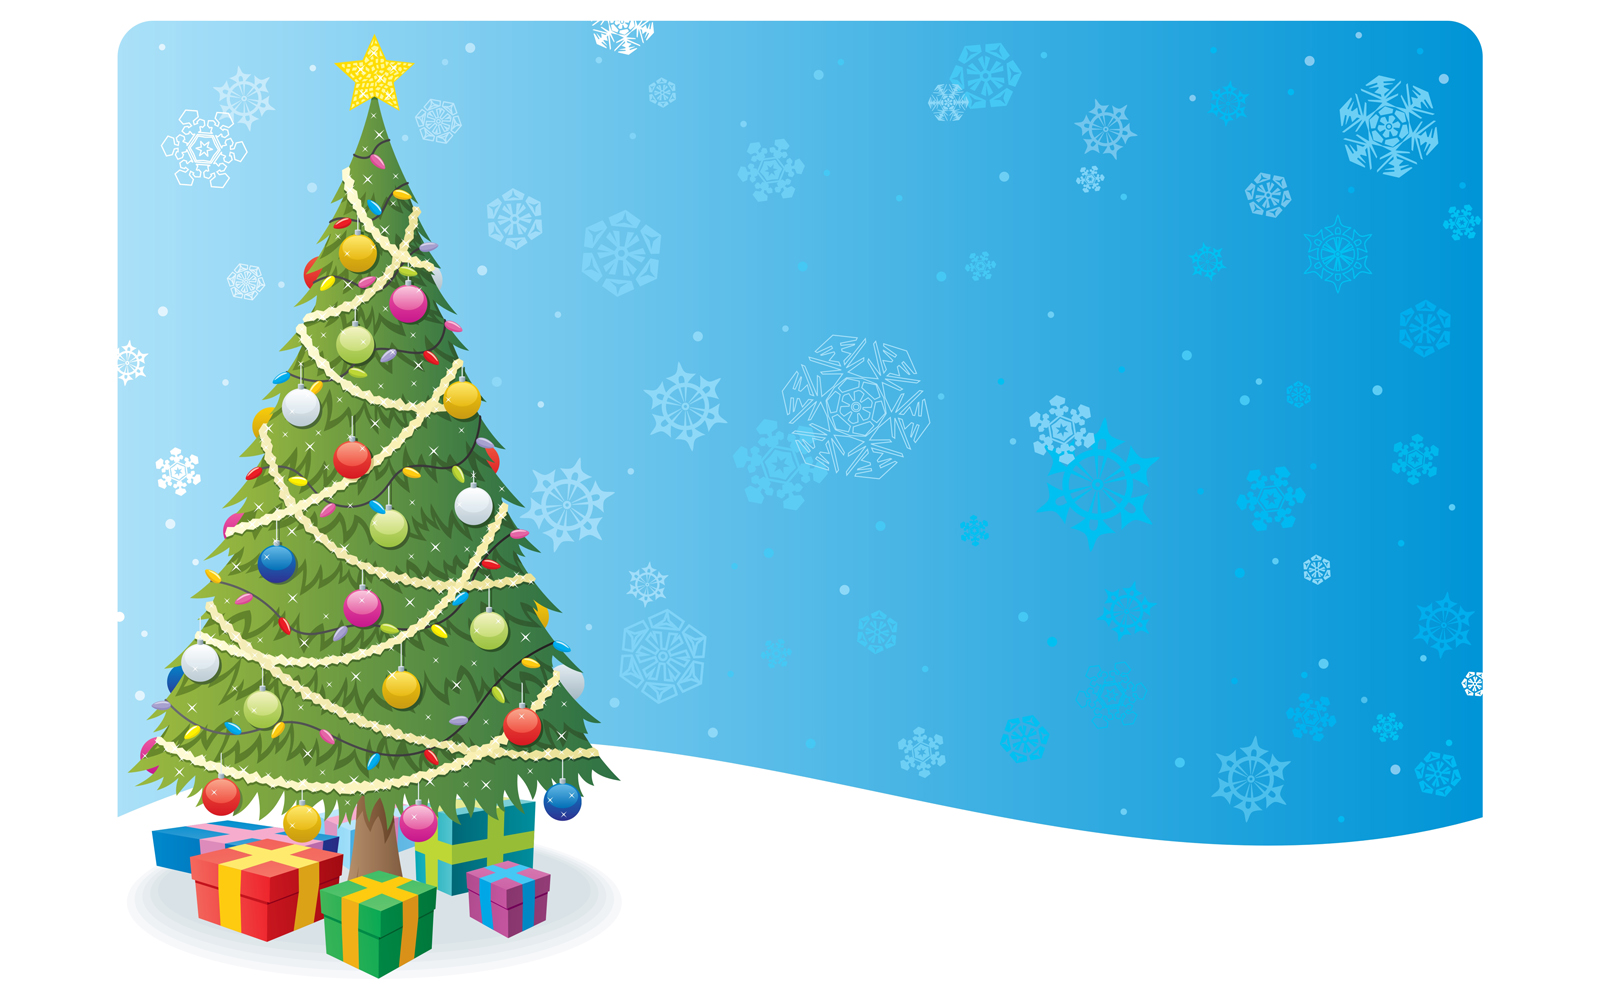 Christmas Tree Background 1 - Illustration